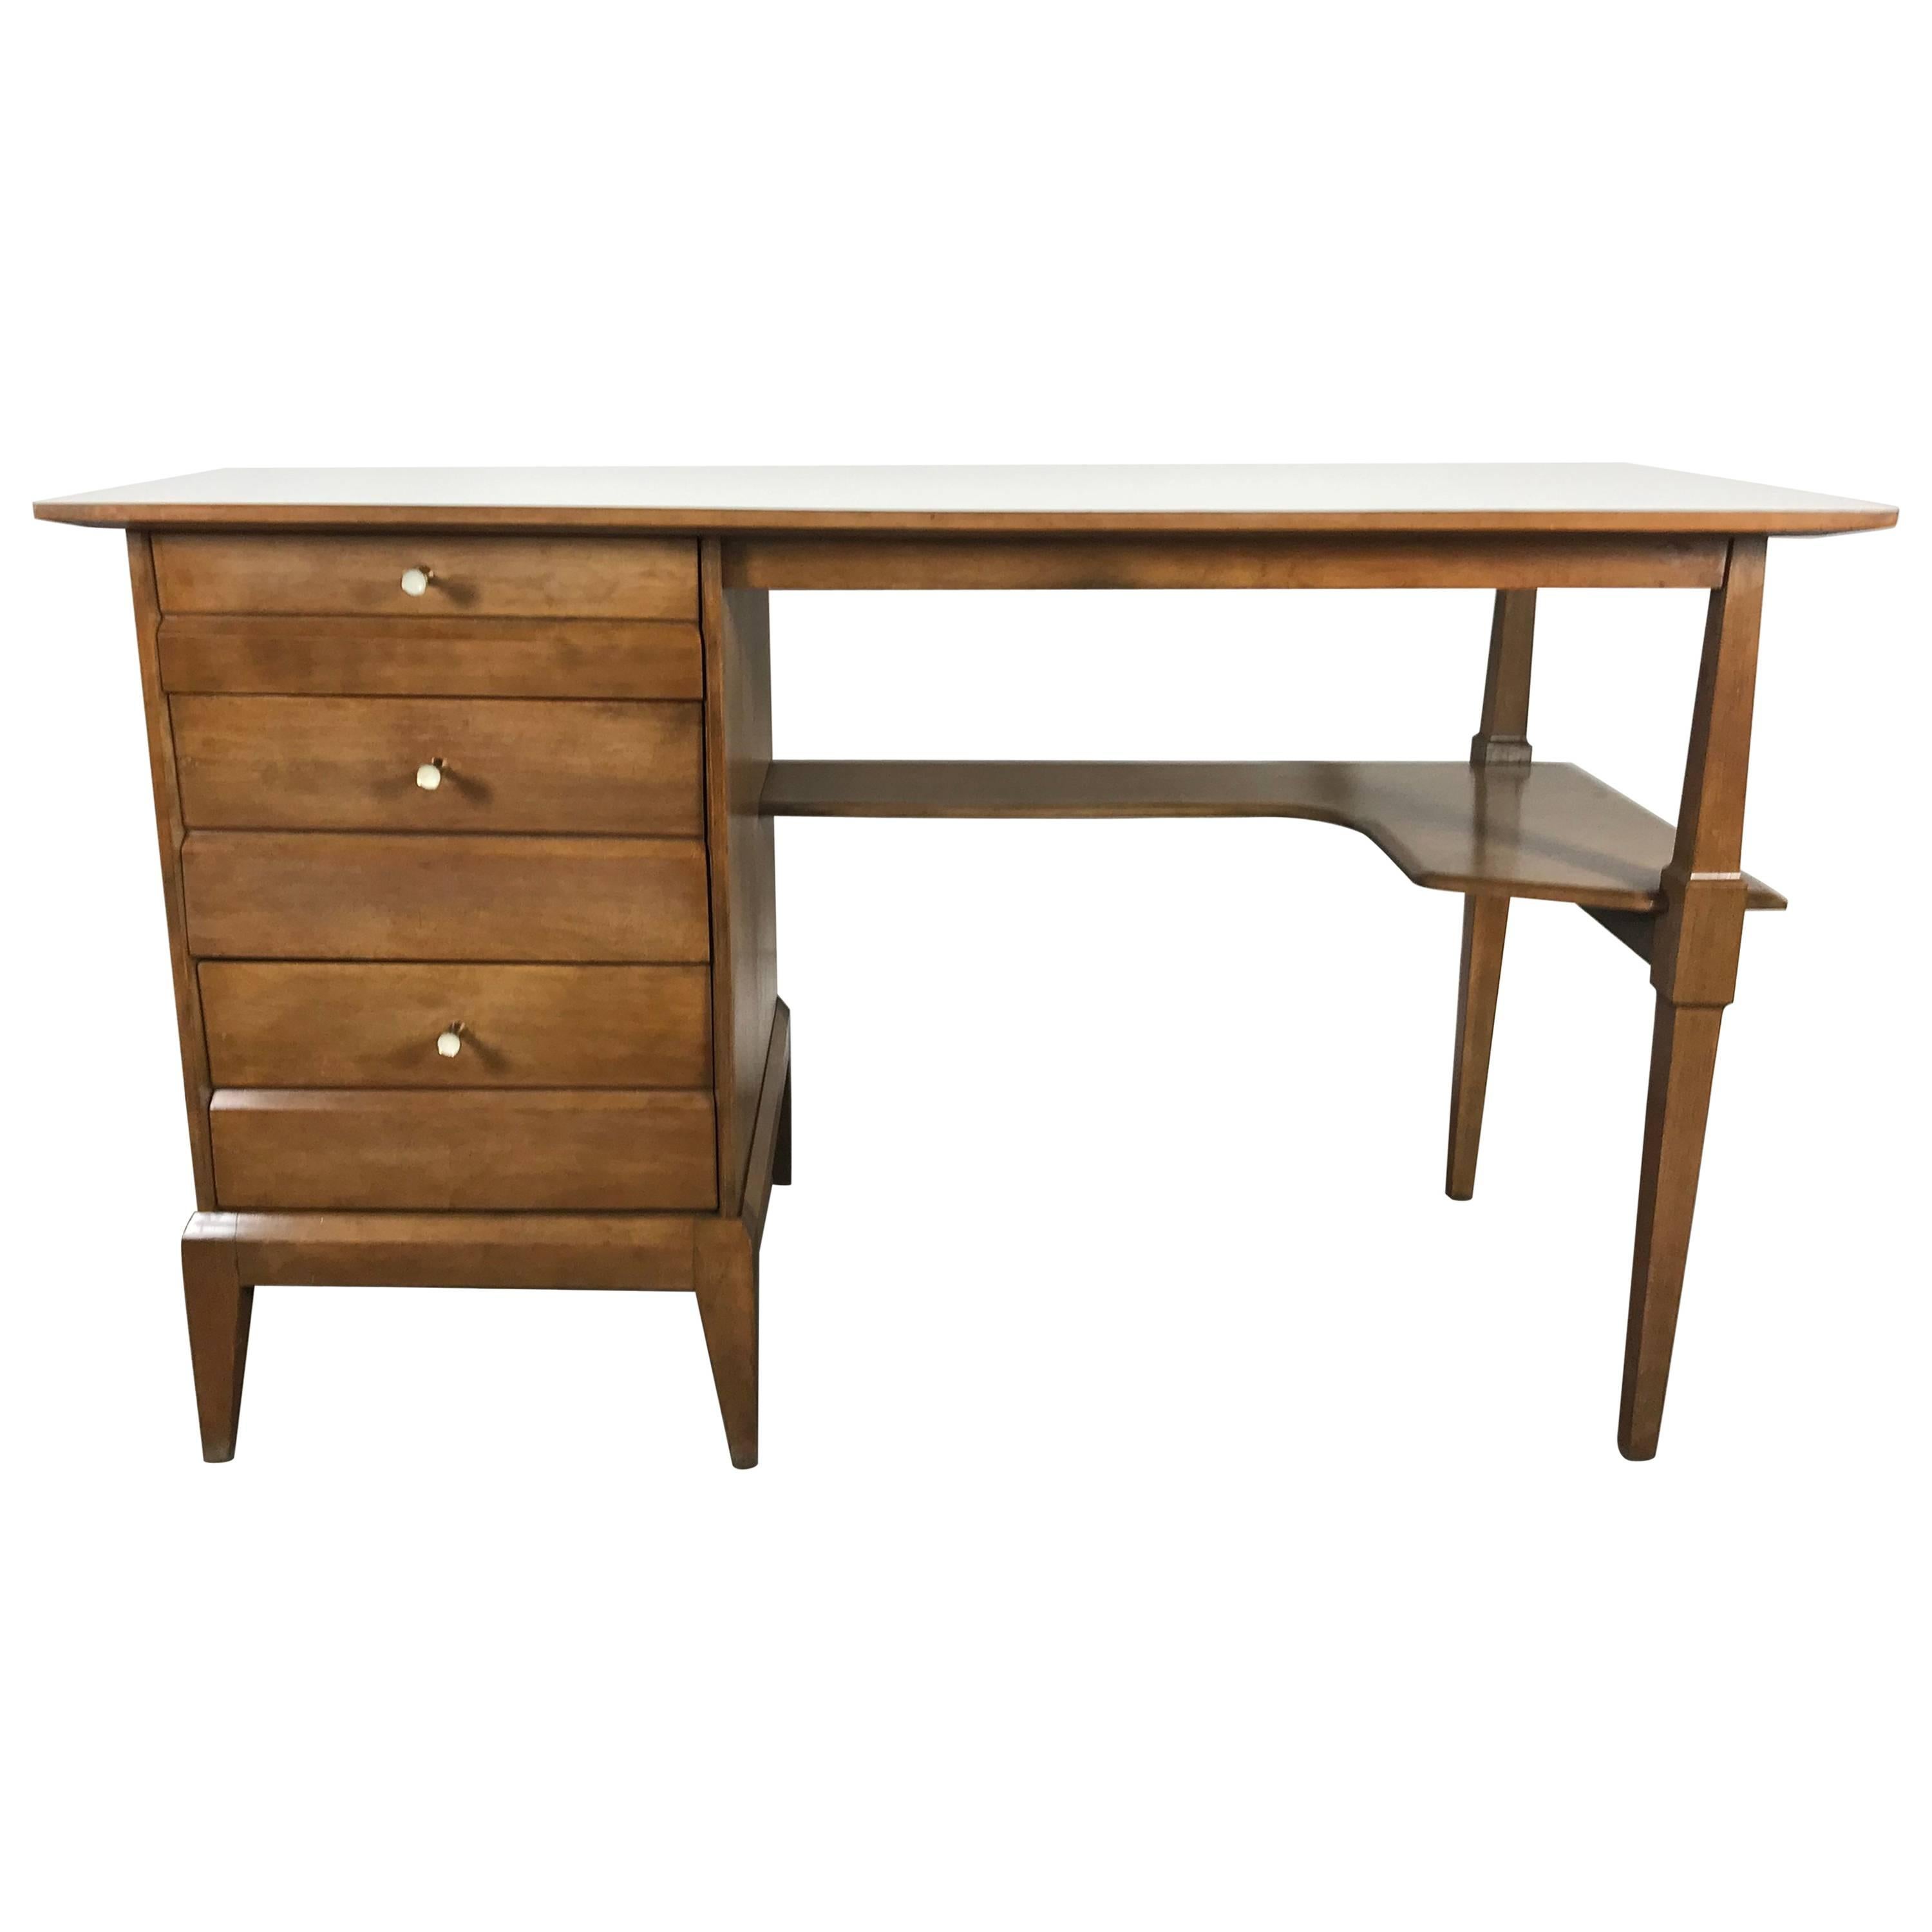 Stylized Mid-Century Modern Desk by Heywood Wakefield